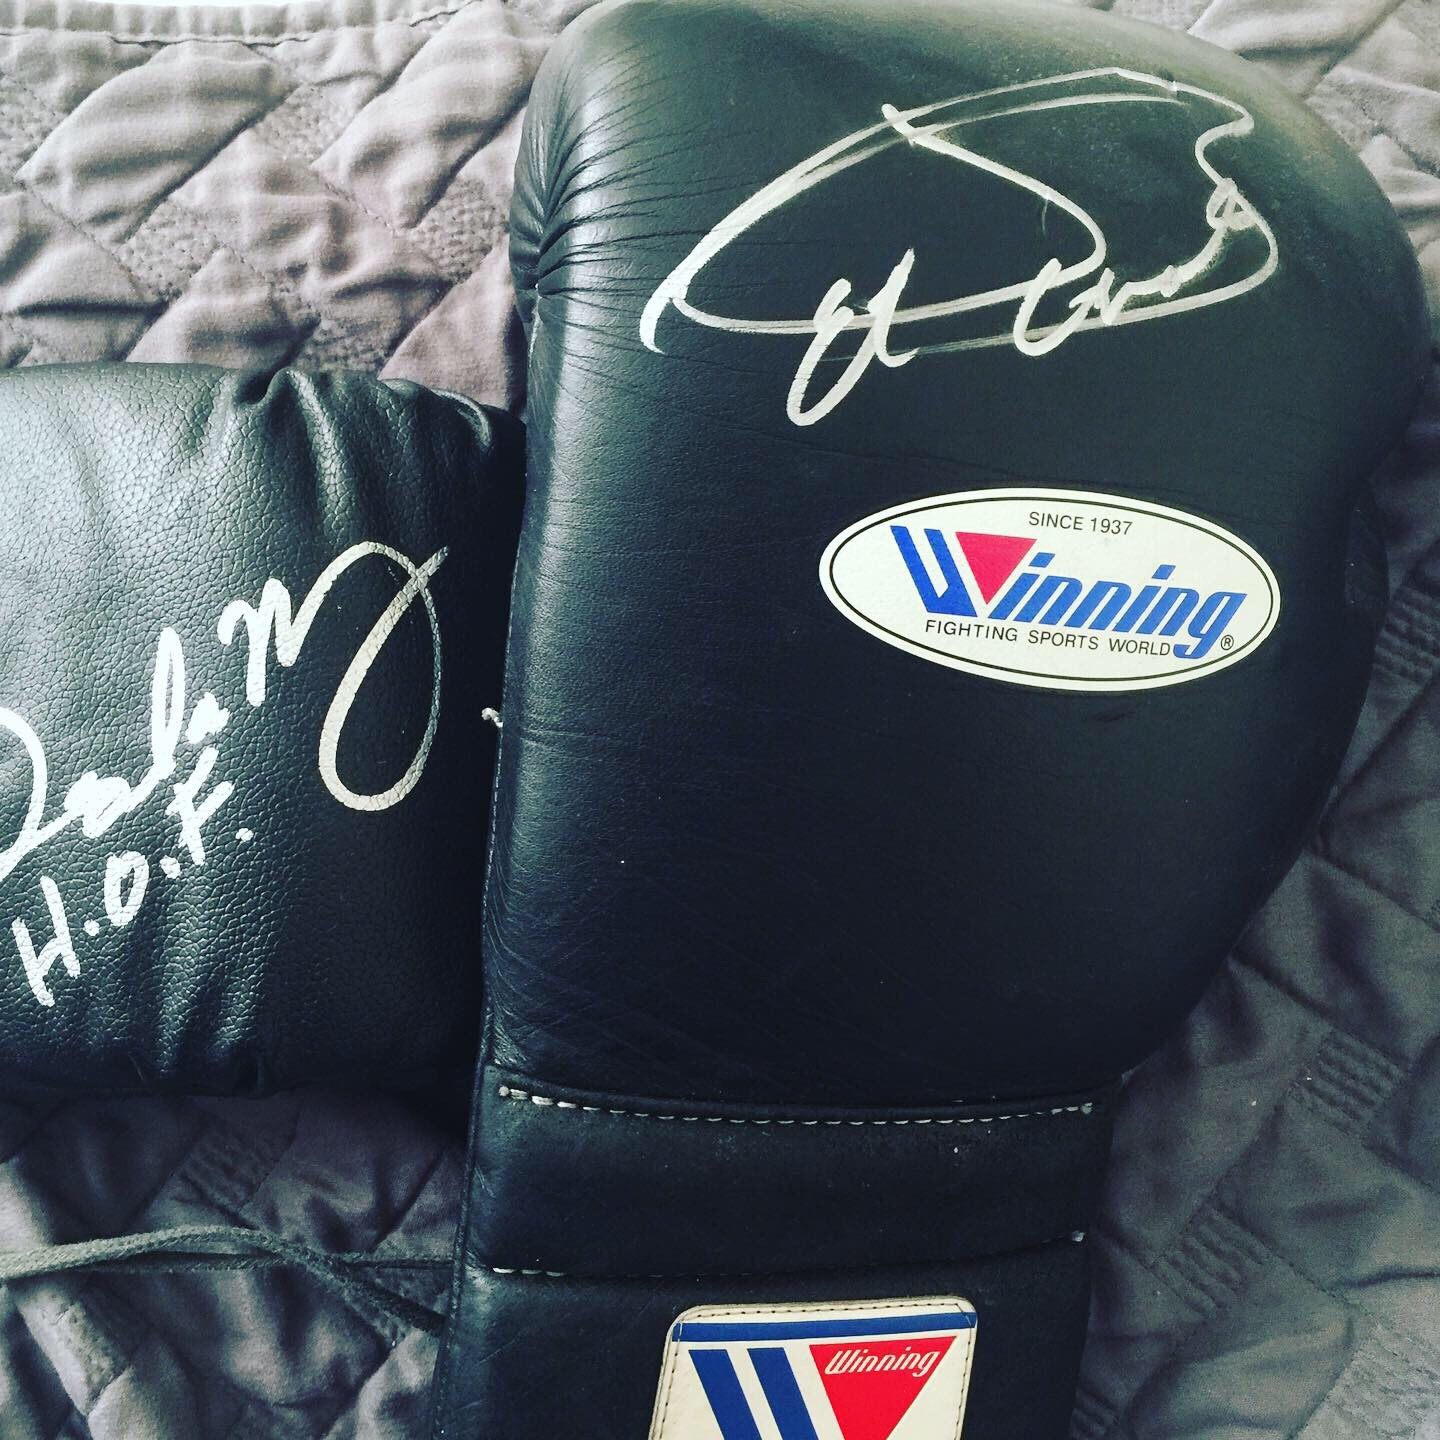 Saul Canelo Alvarez and Oscar De La Hoya 🥊 Boxing gloves